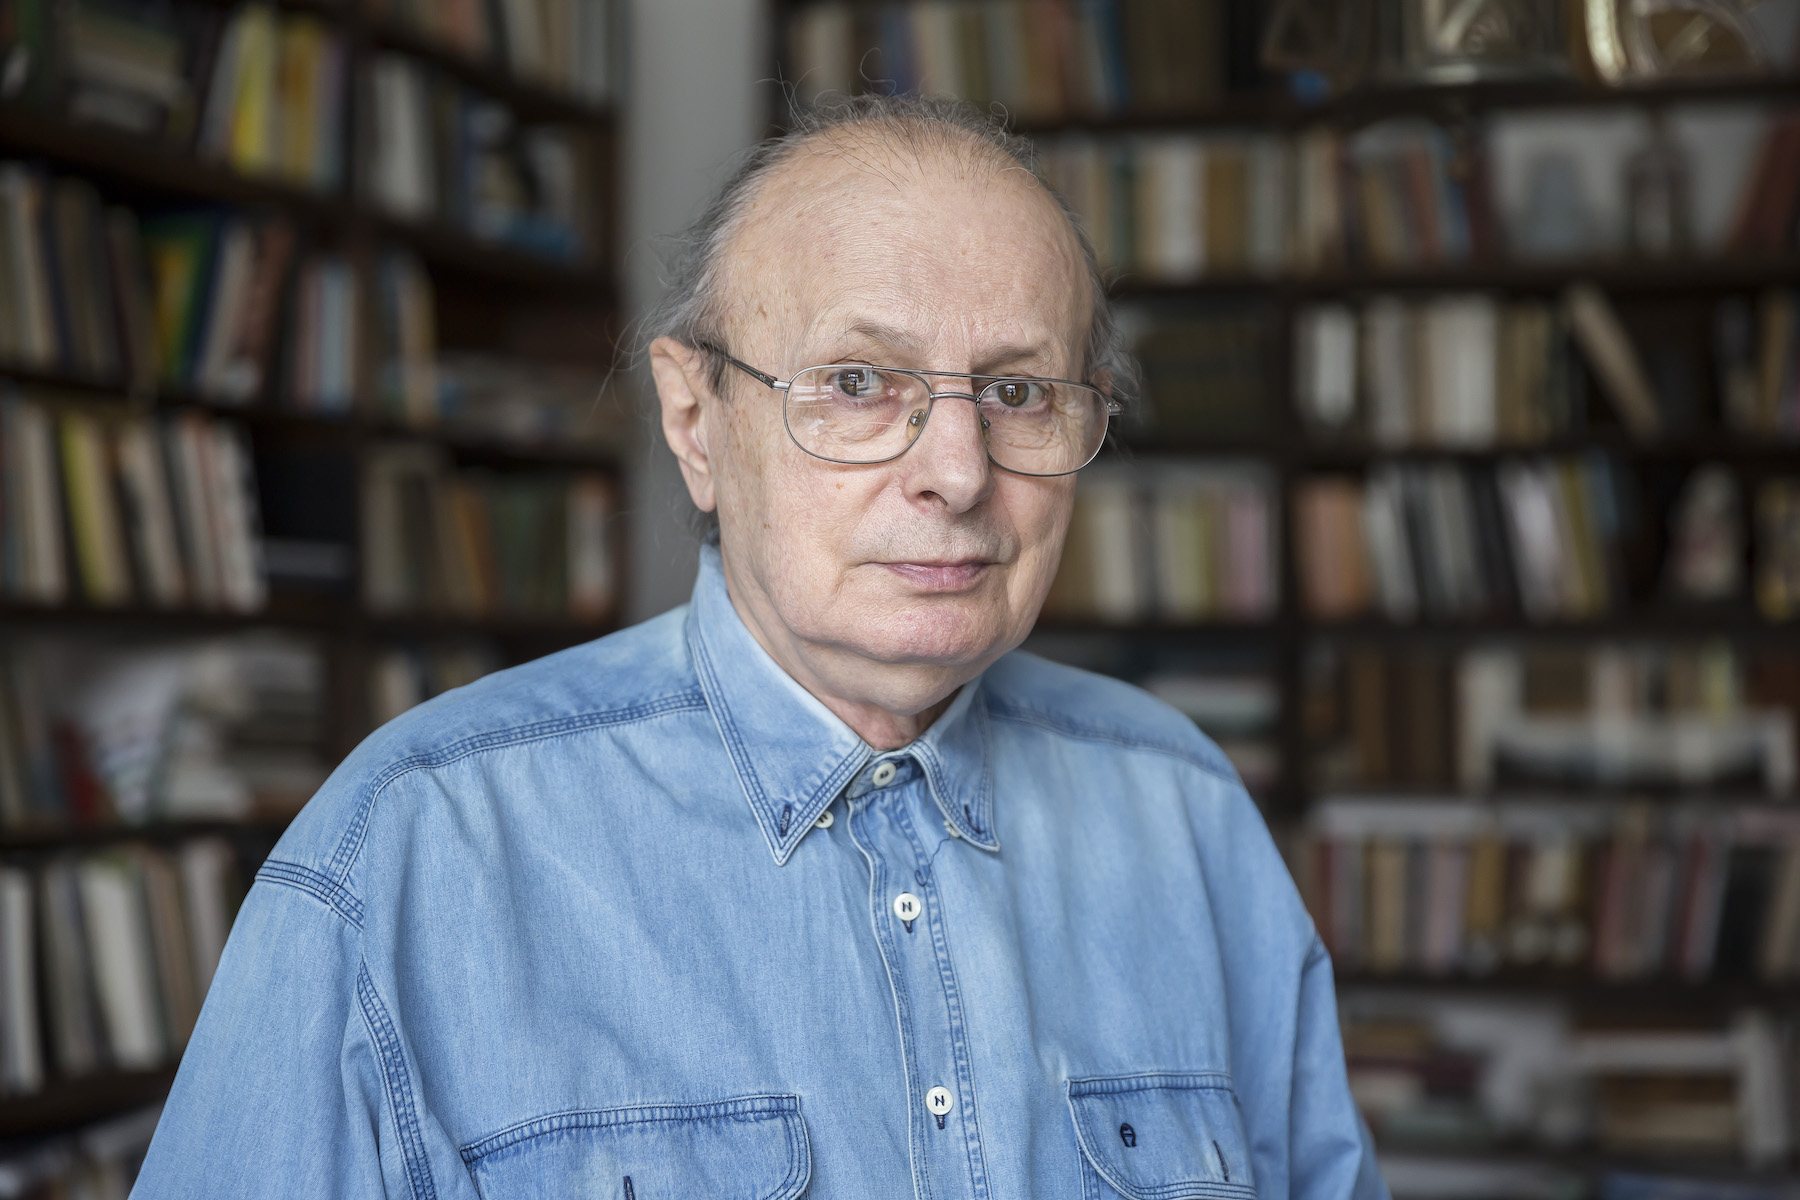 Portrait of György Jovánovics at the time of the interview, 2019. Photograph by Balázs Deim, courtesy of György Jovánovics and Balázs Deim.